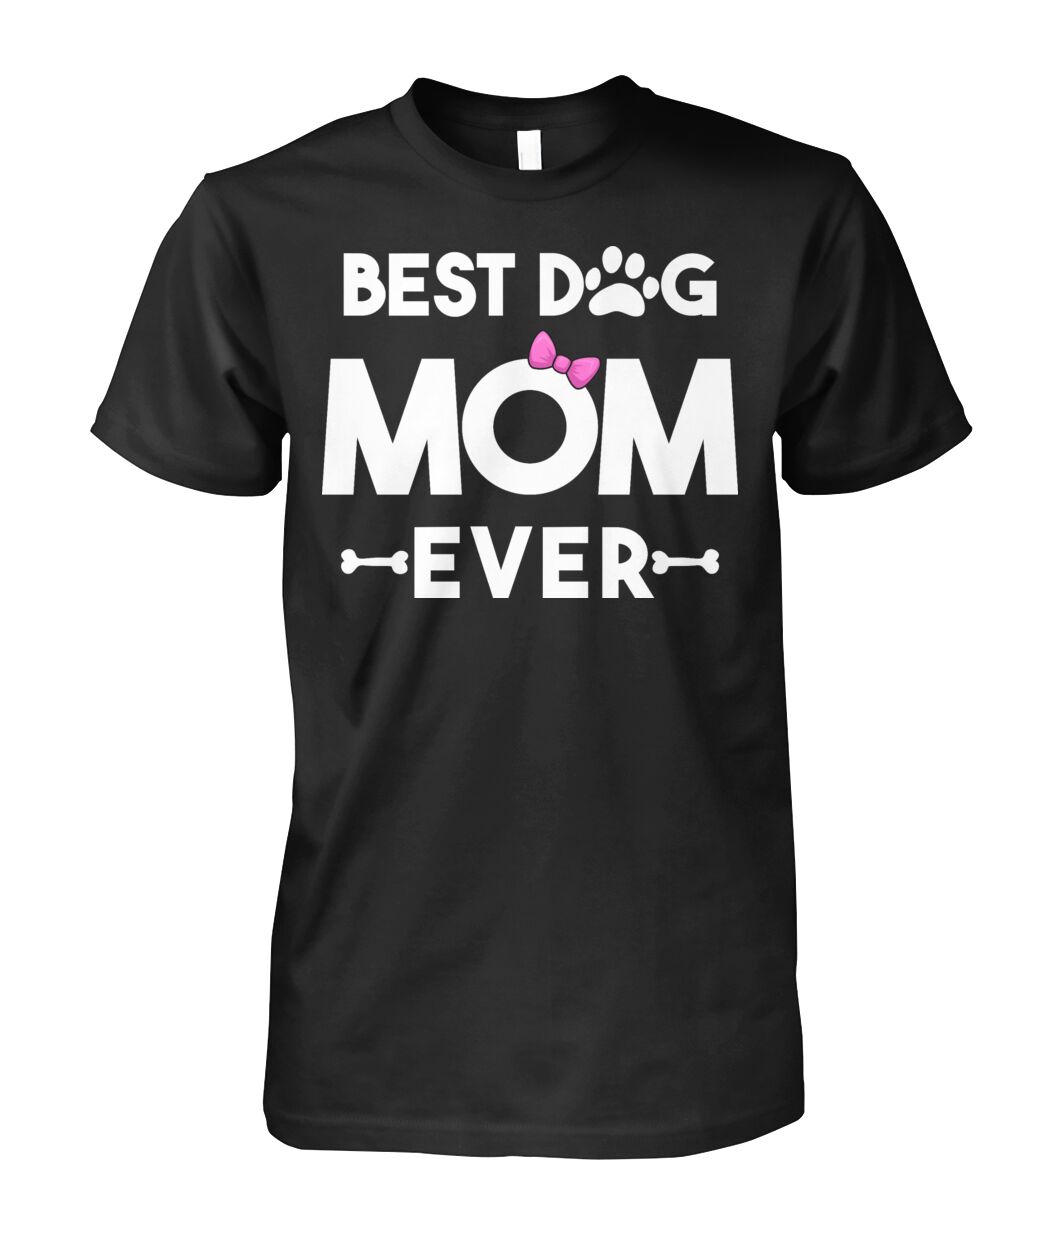 Best Dog Mom Shirt (White Text)